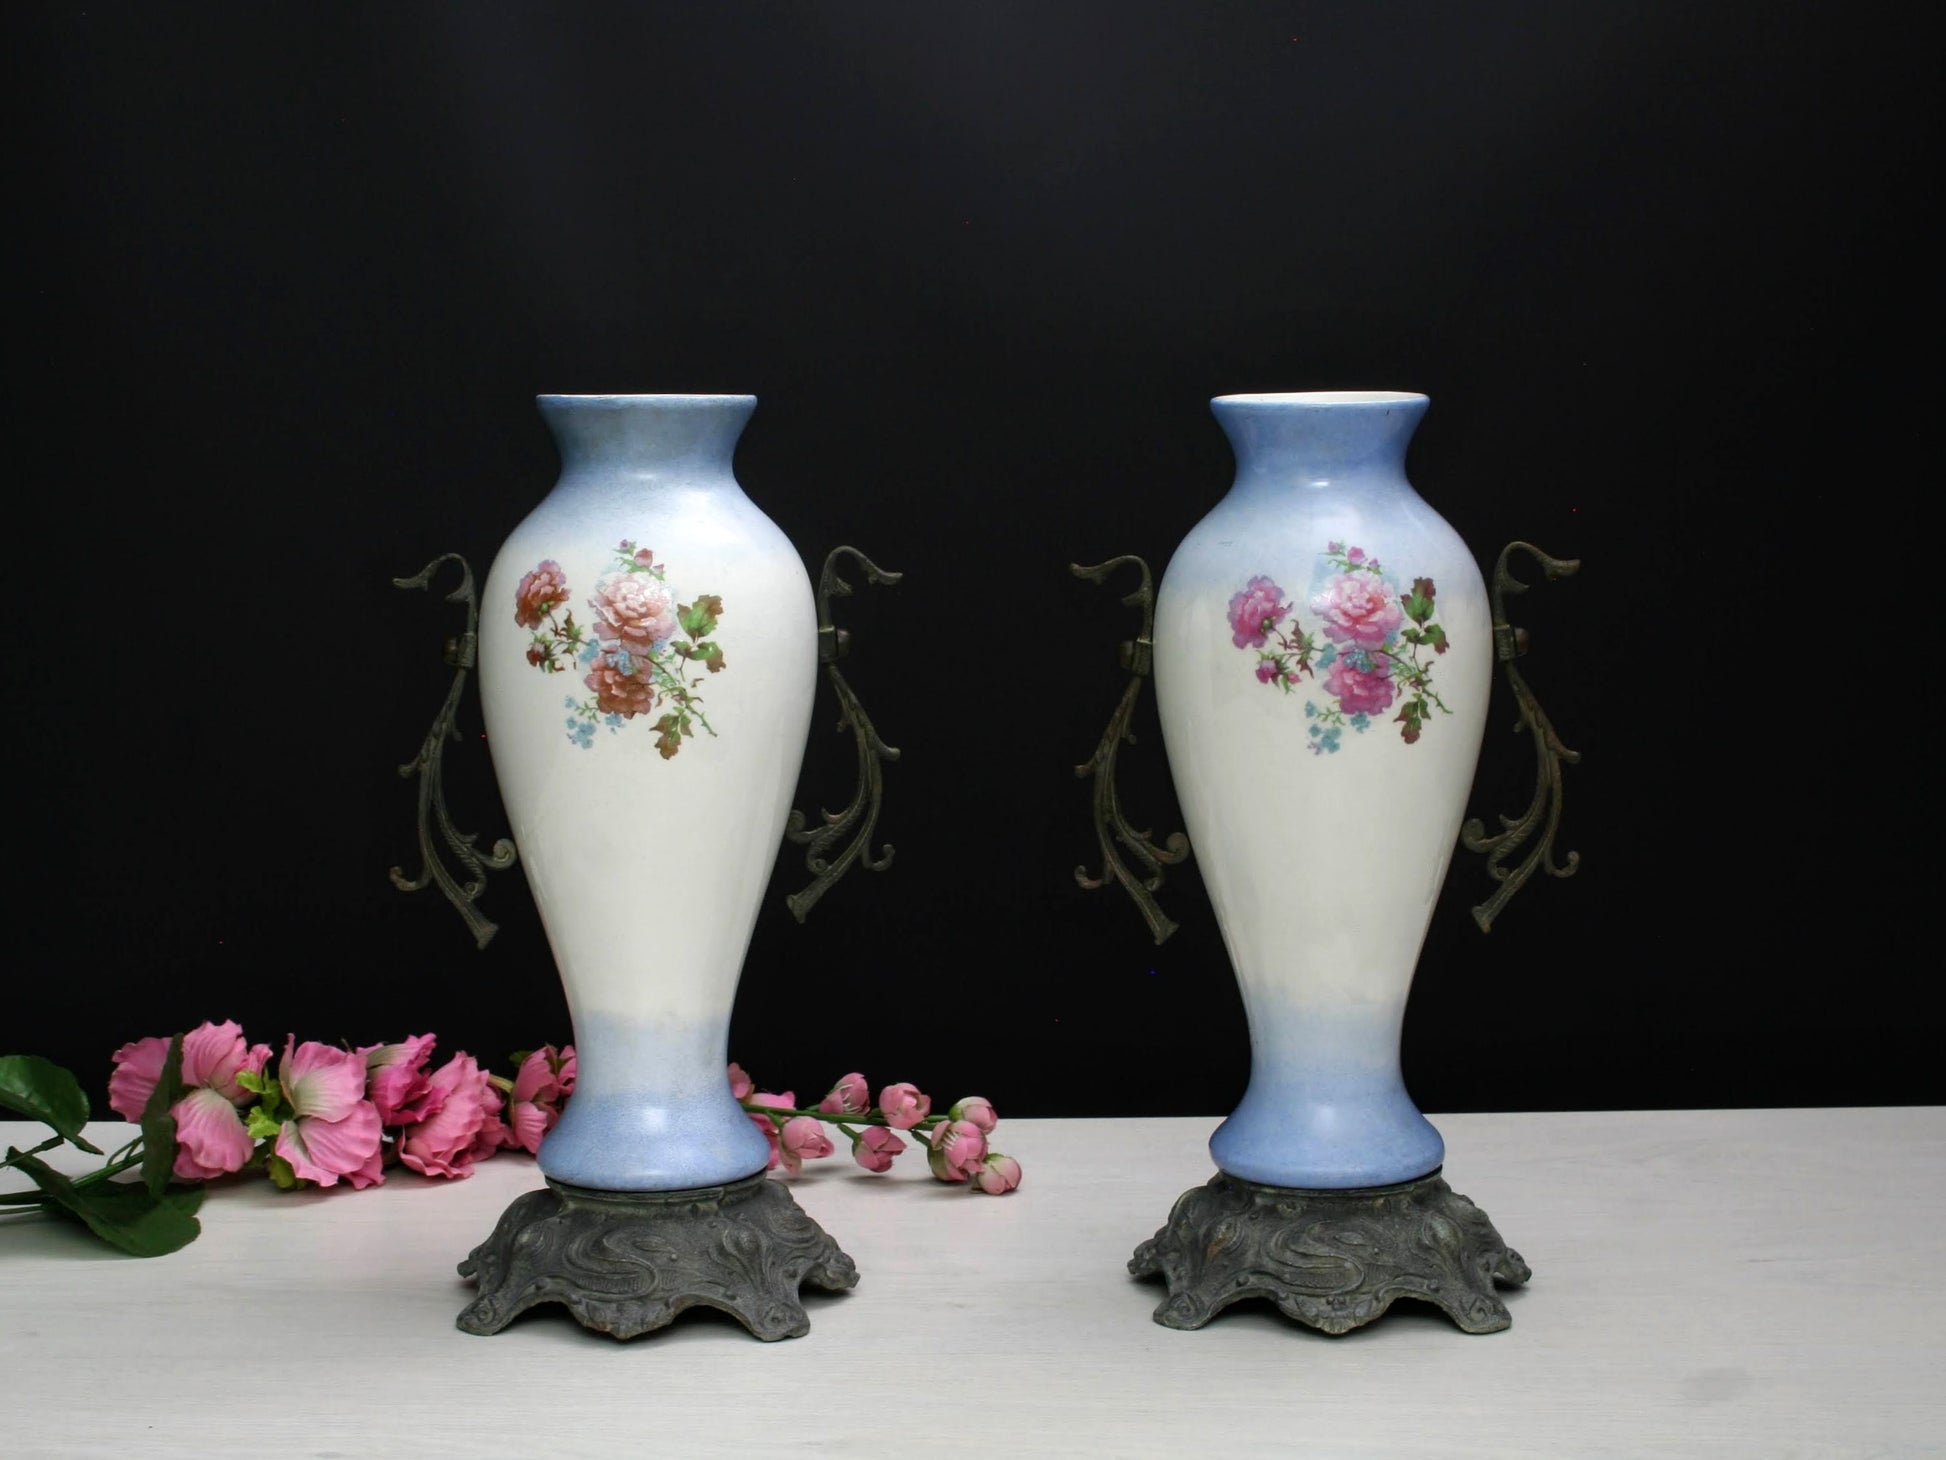 Ceramic Vase-Blue and White Vase-Decorative Vase-Antique Vase-French Vase-Unique Flower Vase-French Decor-Unique Vases-Vintage Home Decor